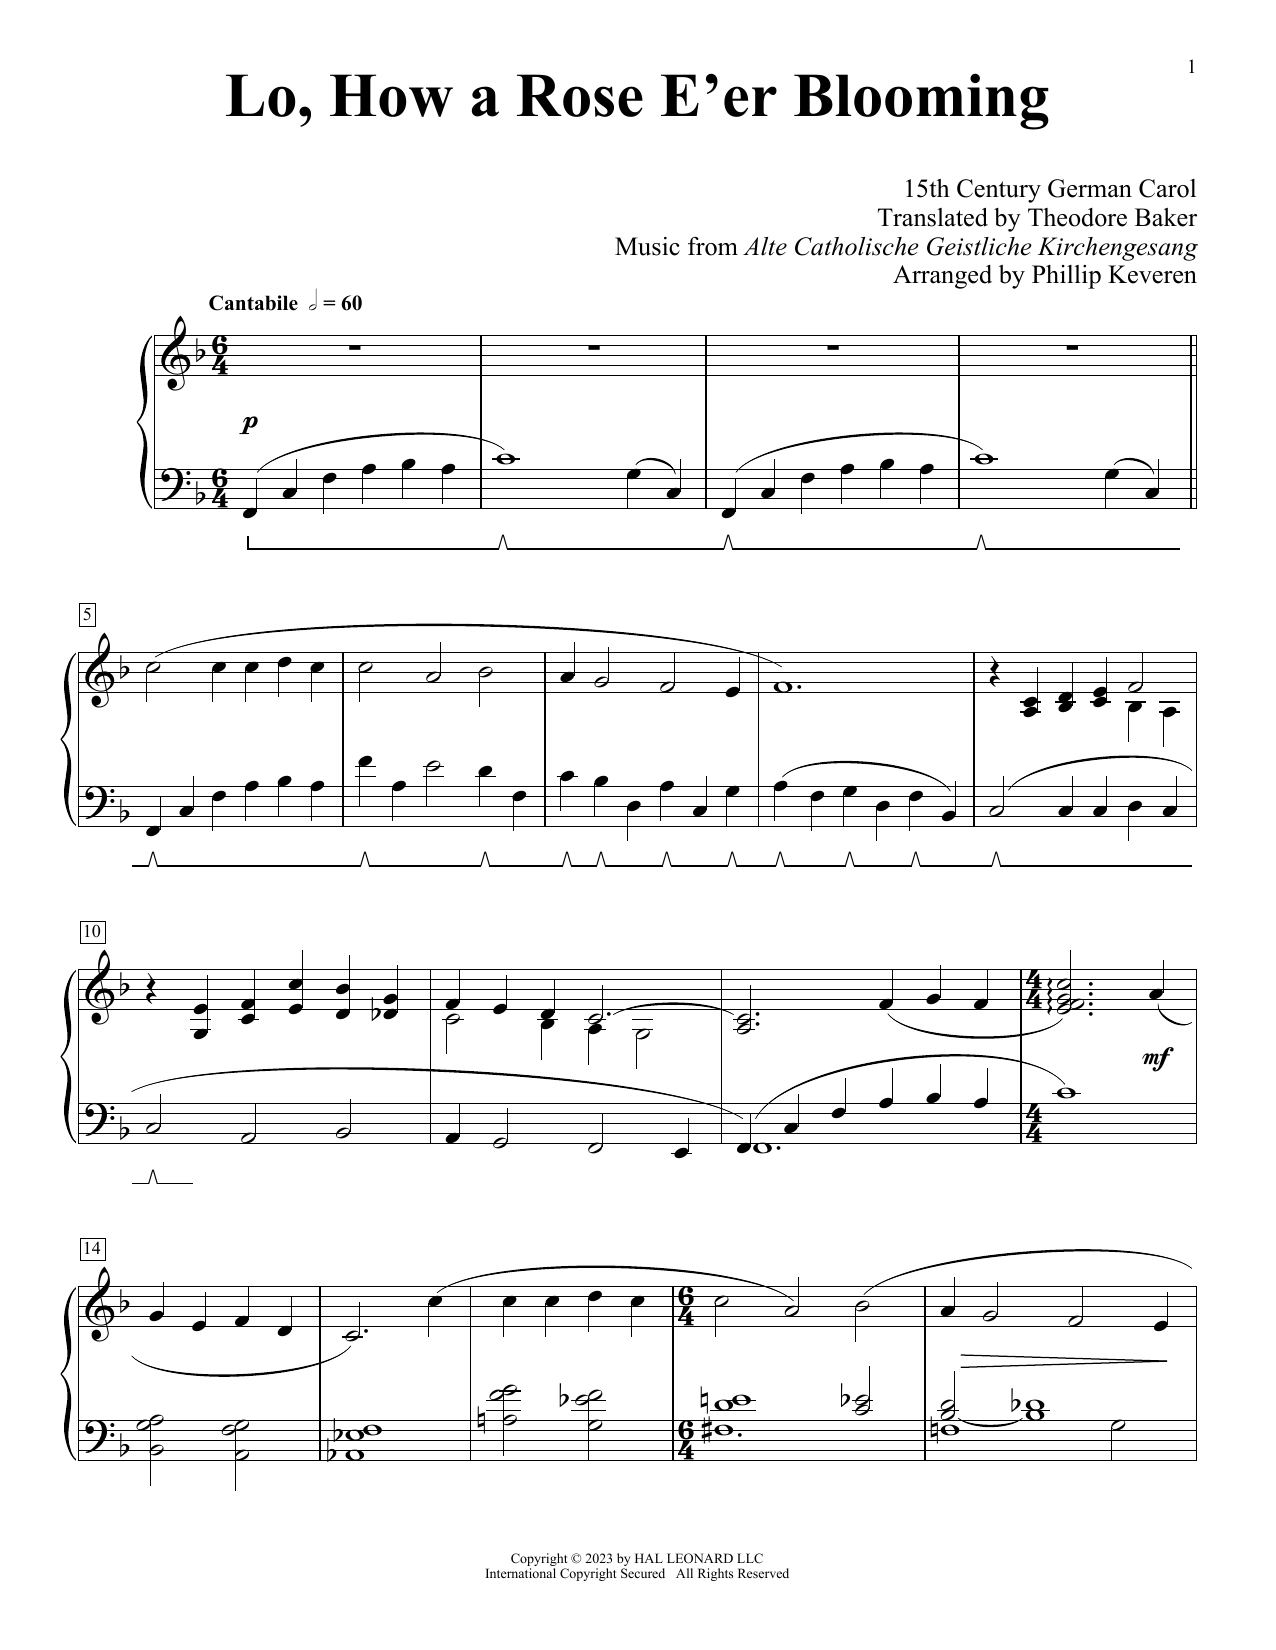 15th Century German Carol Lo, How A Rose E'er Blooming (arr. Phillip Keveren) sheet music notes printable PDF score